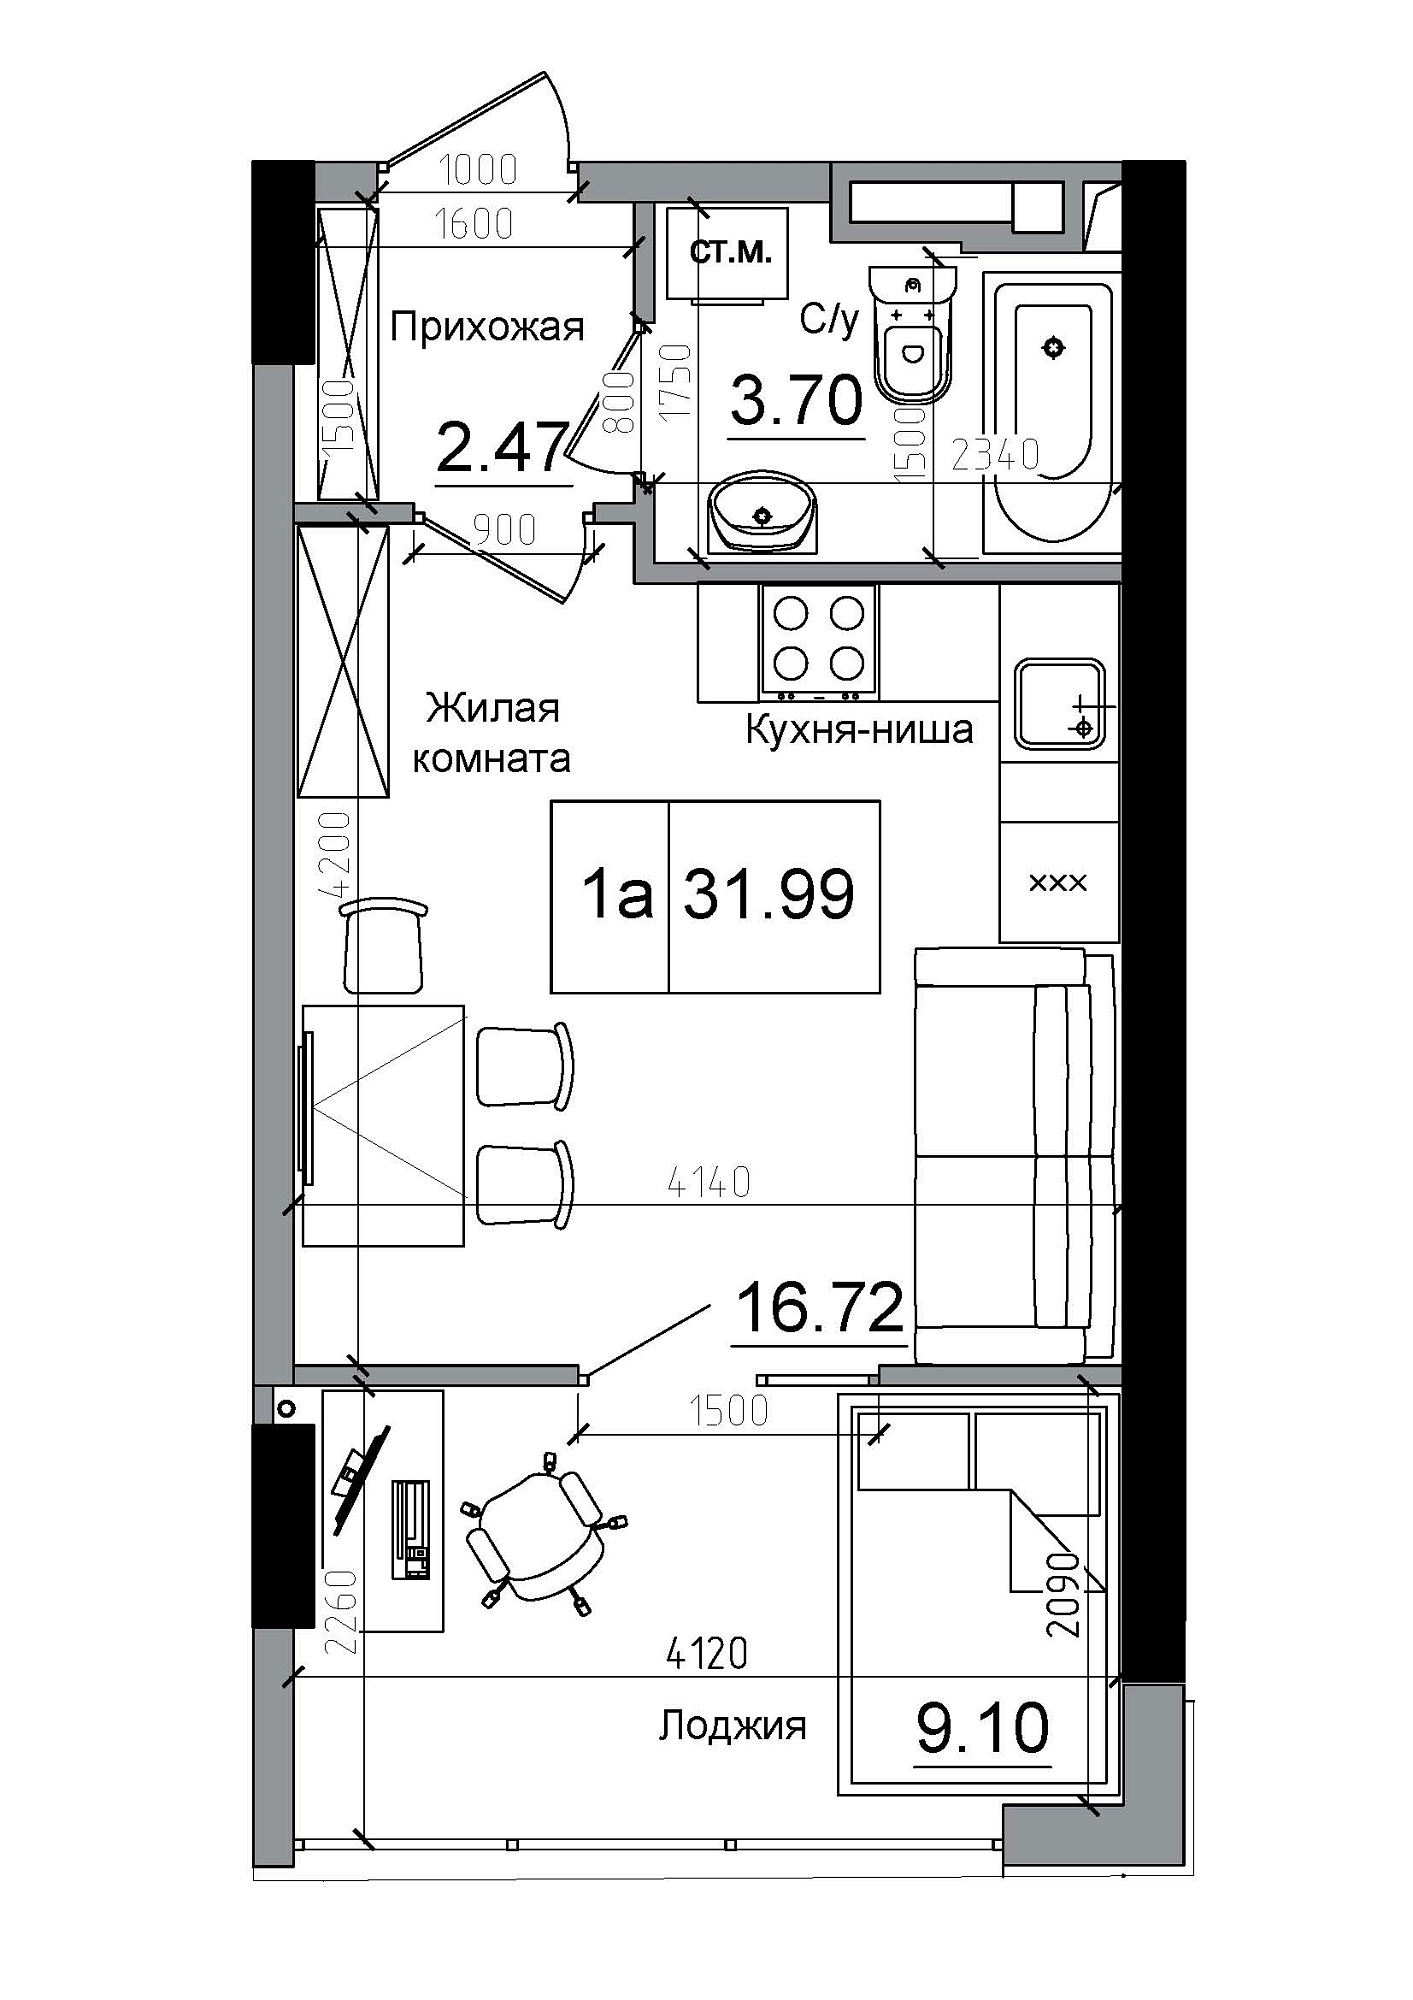 Planning Smart flats area 31.99m2, AB-12-07/00001.